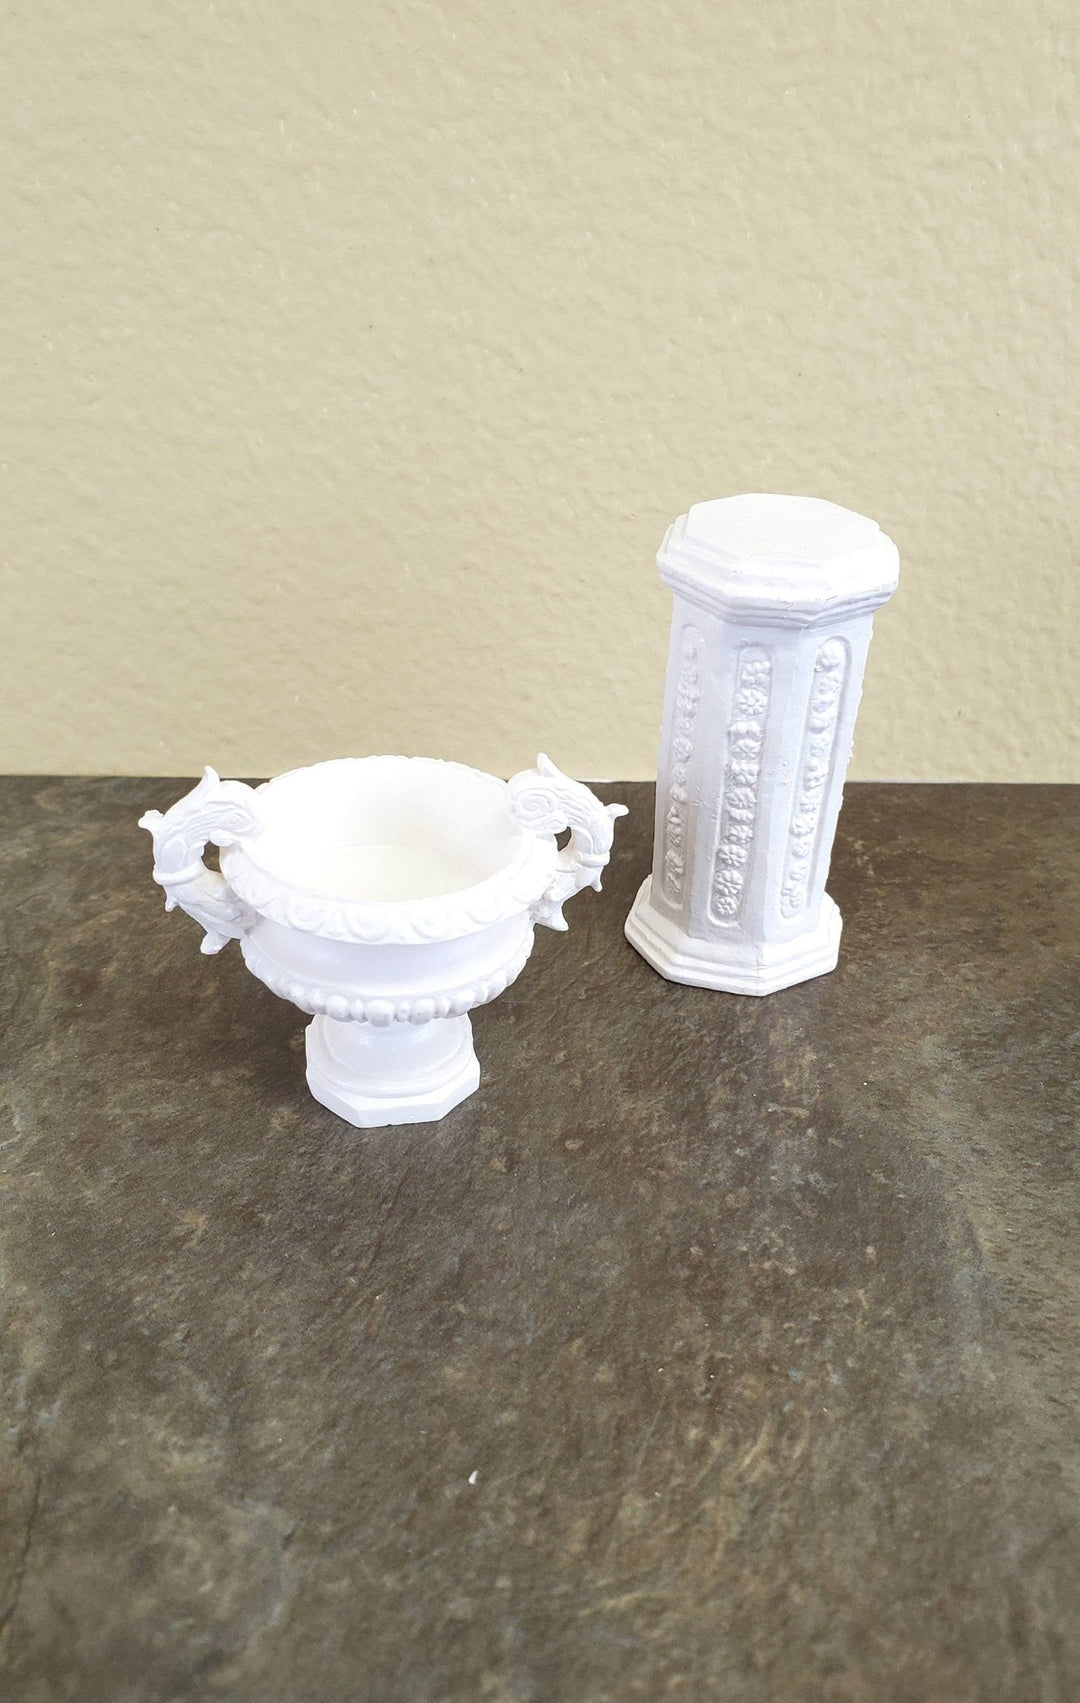 Dollhouse Miniature Pedestal Plant Stand w/ 2 Handled Urn Cast Resin 1:12 Scale White - Miniature Crush